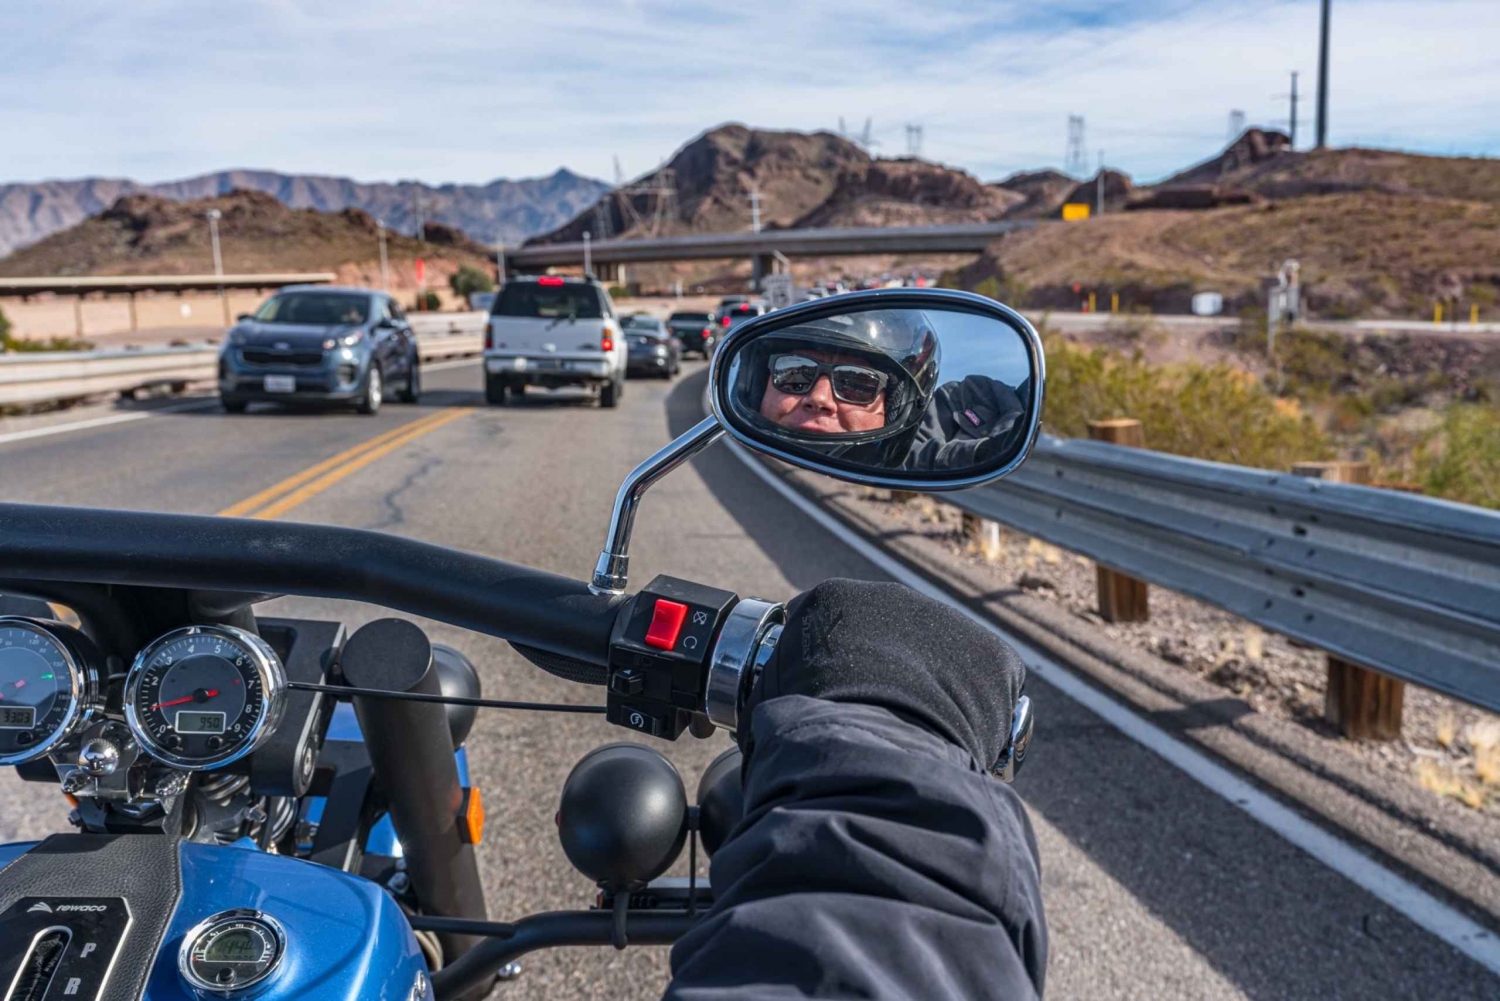 Las Vegasissa: Hoover Dam Trike Tour